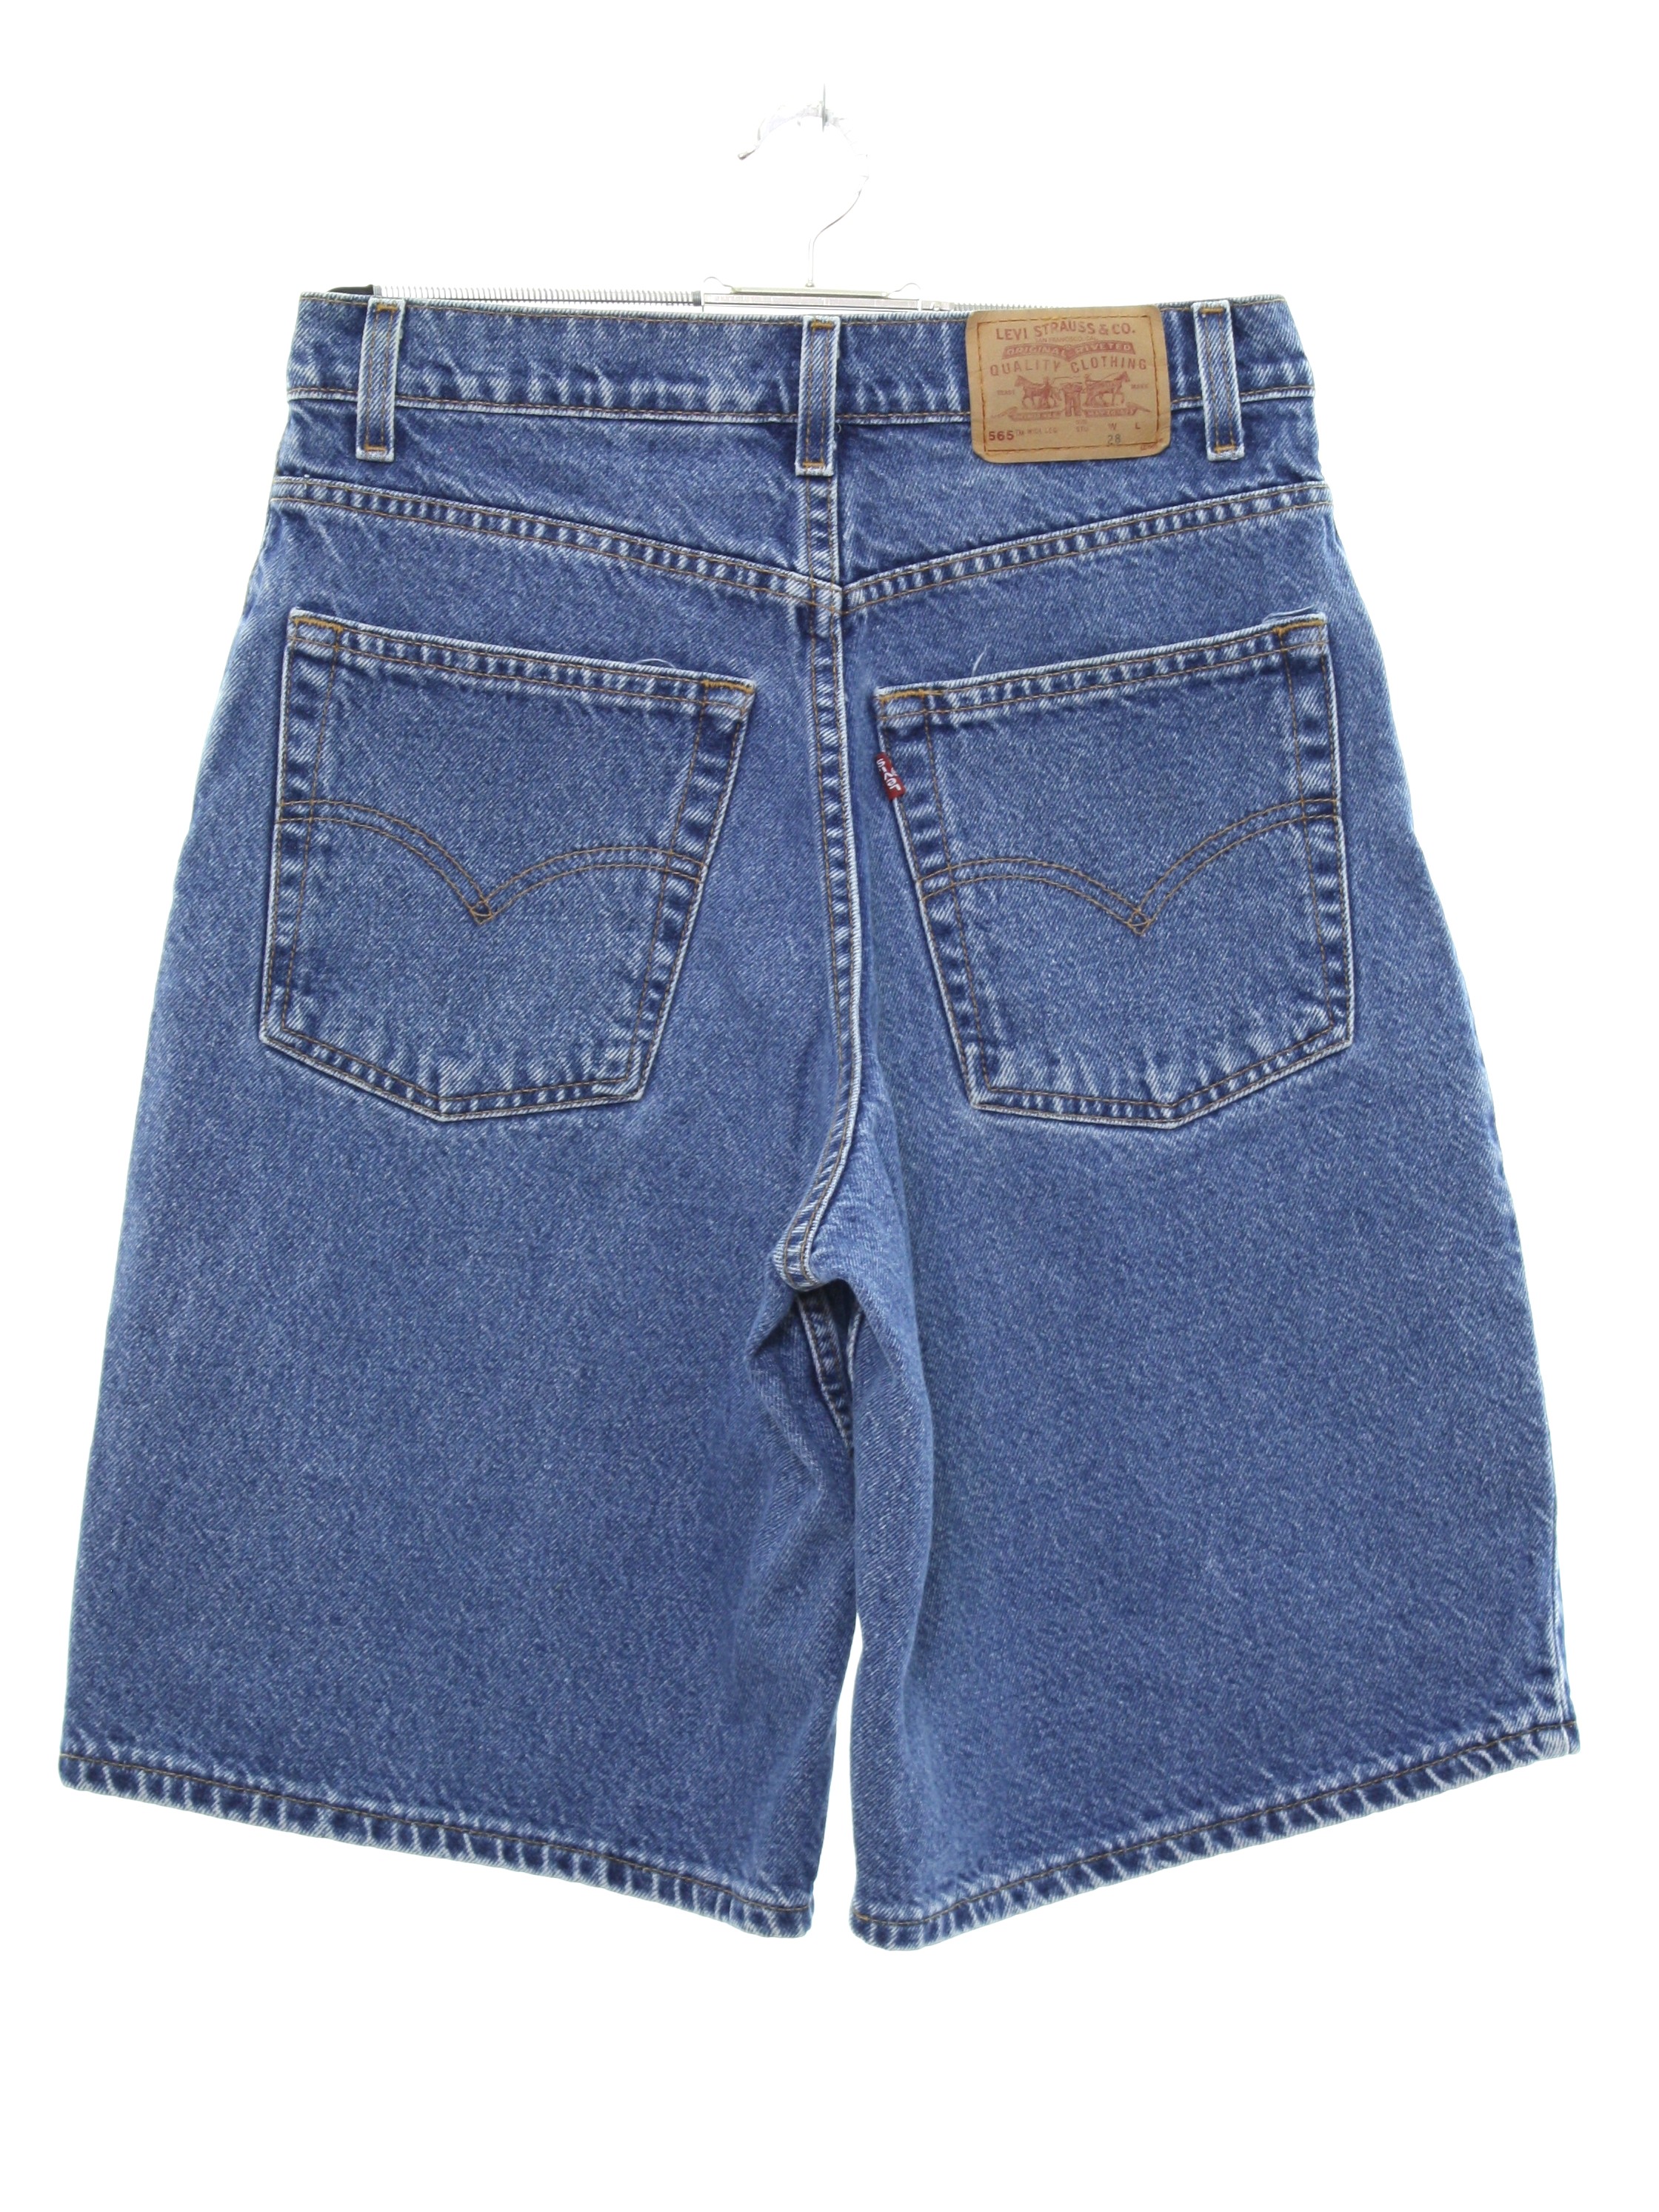 1990's Vintage Levis 565 Wide Leg Student Fit Shorts: Early 90s -Levis 565 Wide  Leg Student Fit- Mens blue cotton denim denim jeans shorts with zipper fly  closure with button. Five pocket